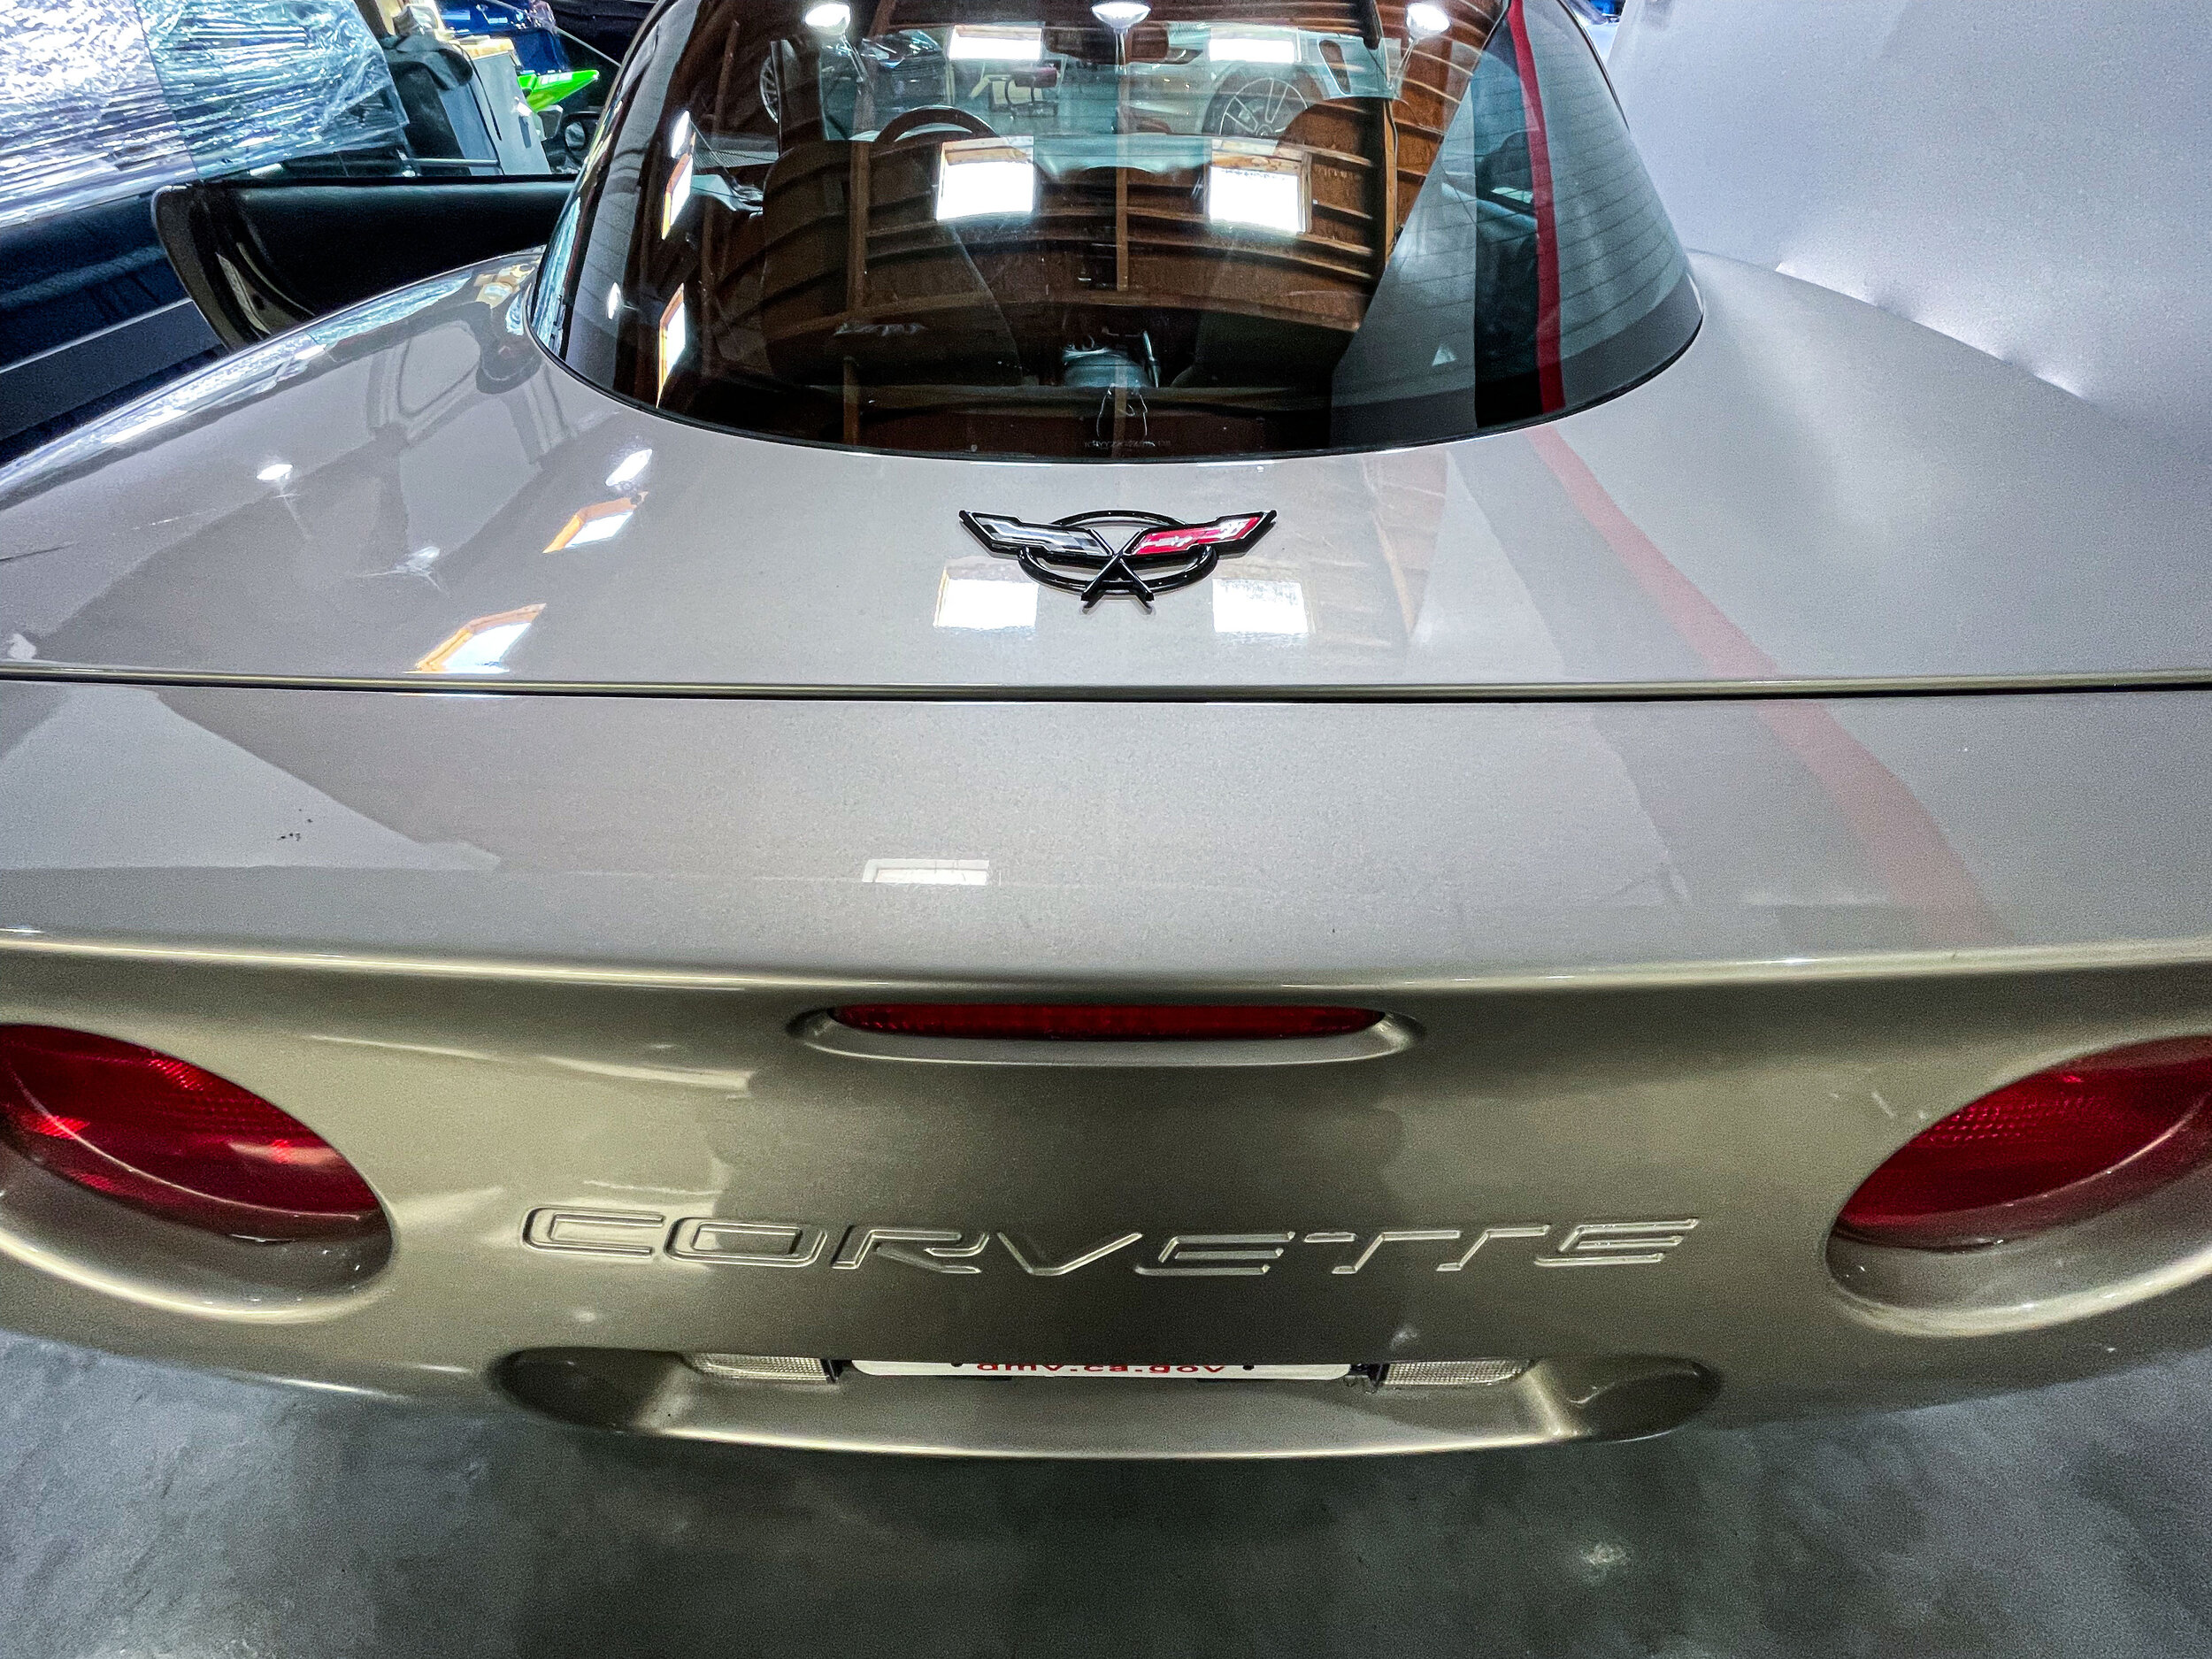 Corvette-trustworthy-motors-ads-san-francisco-14.jpg